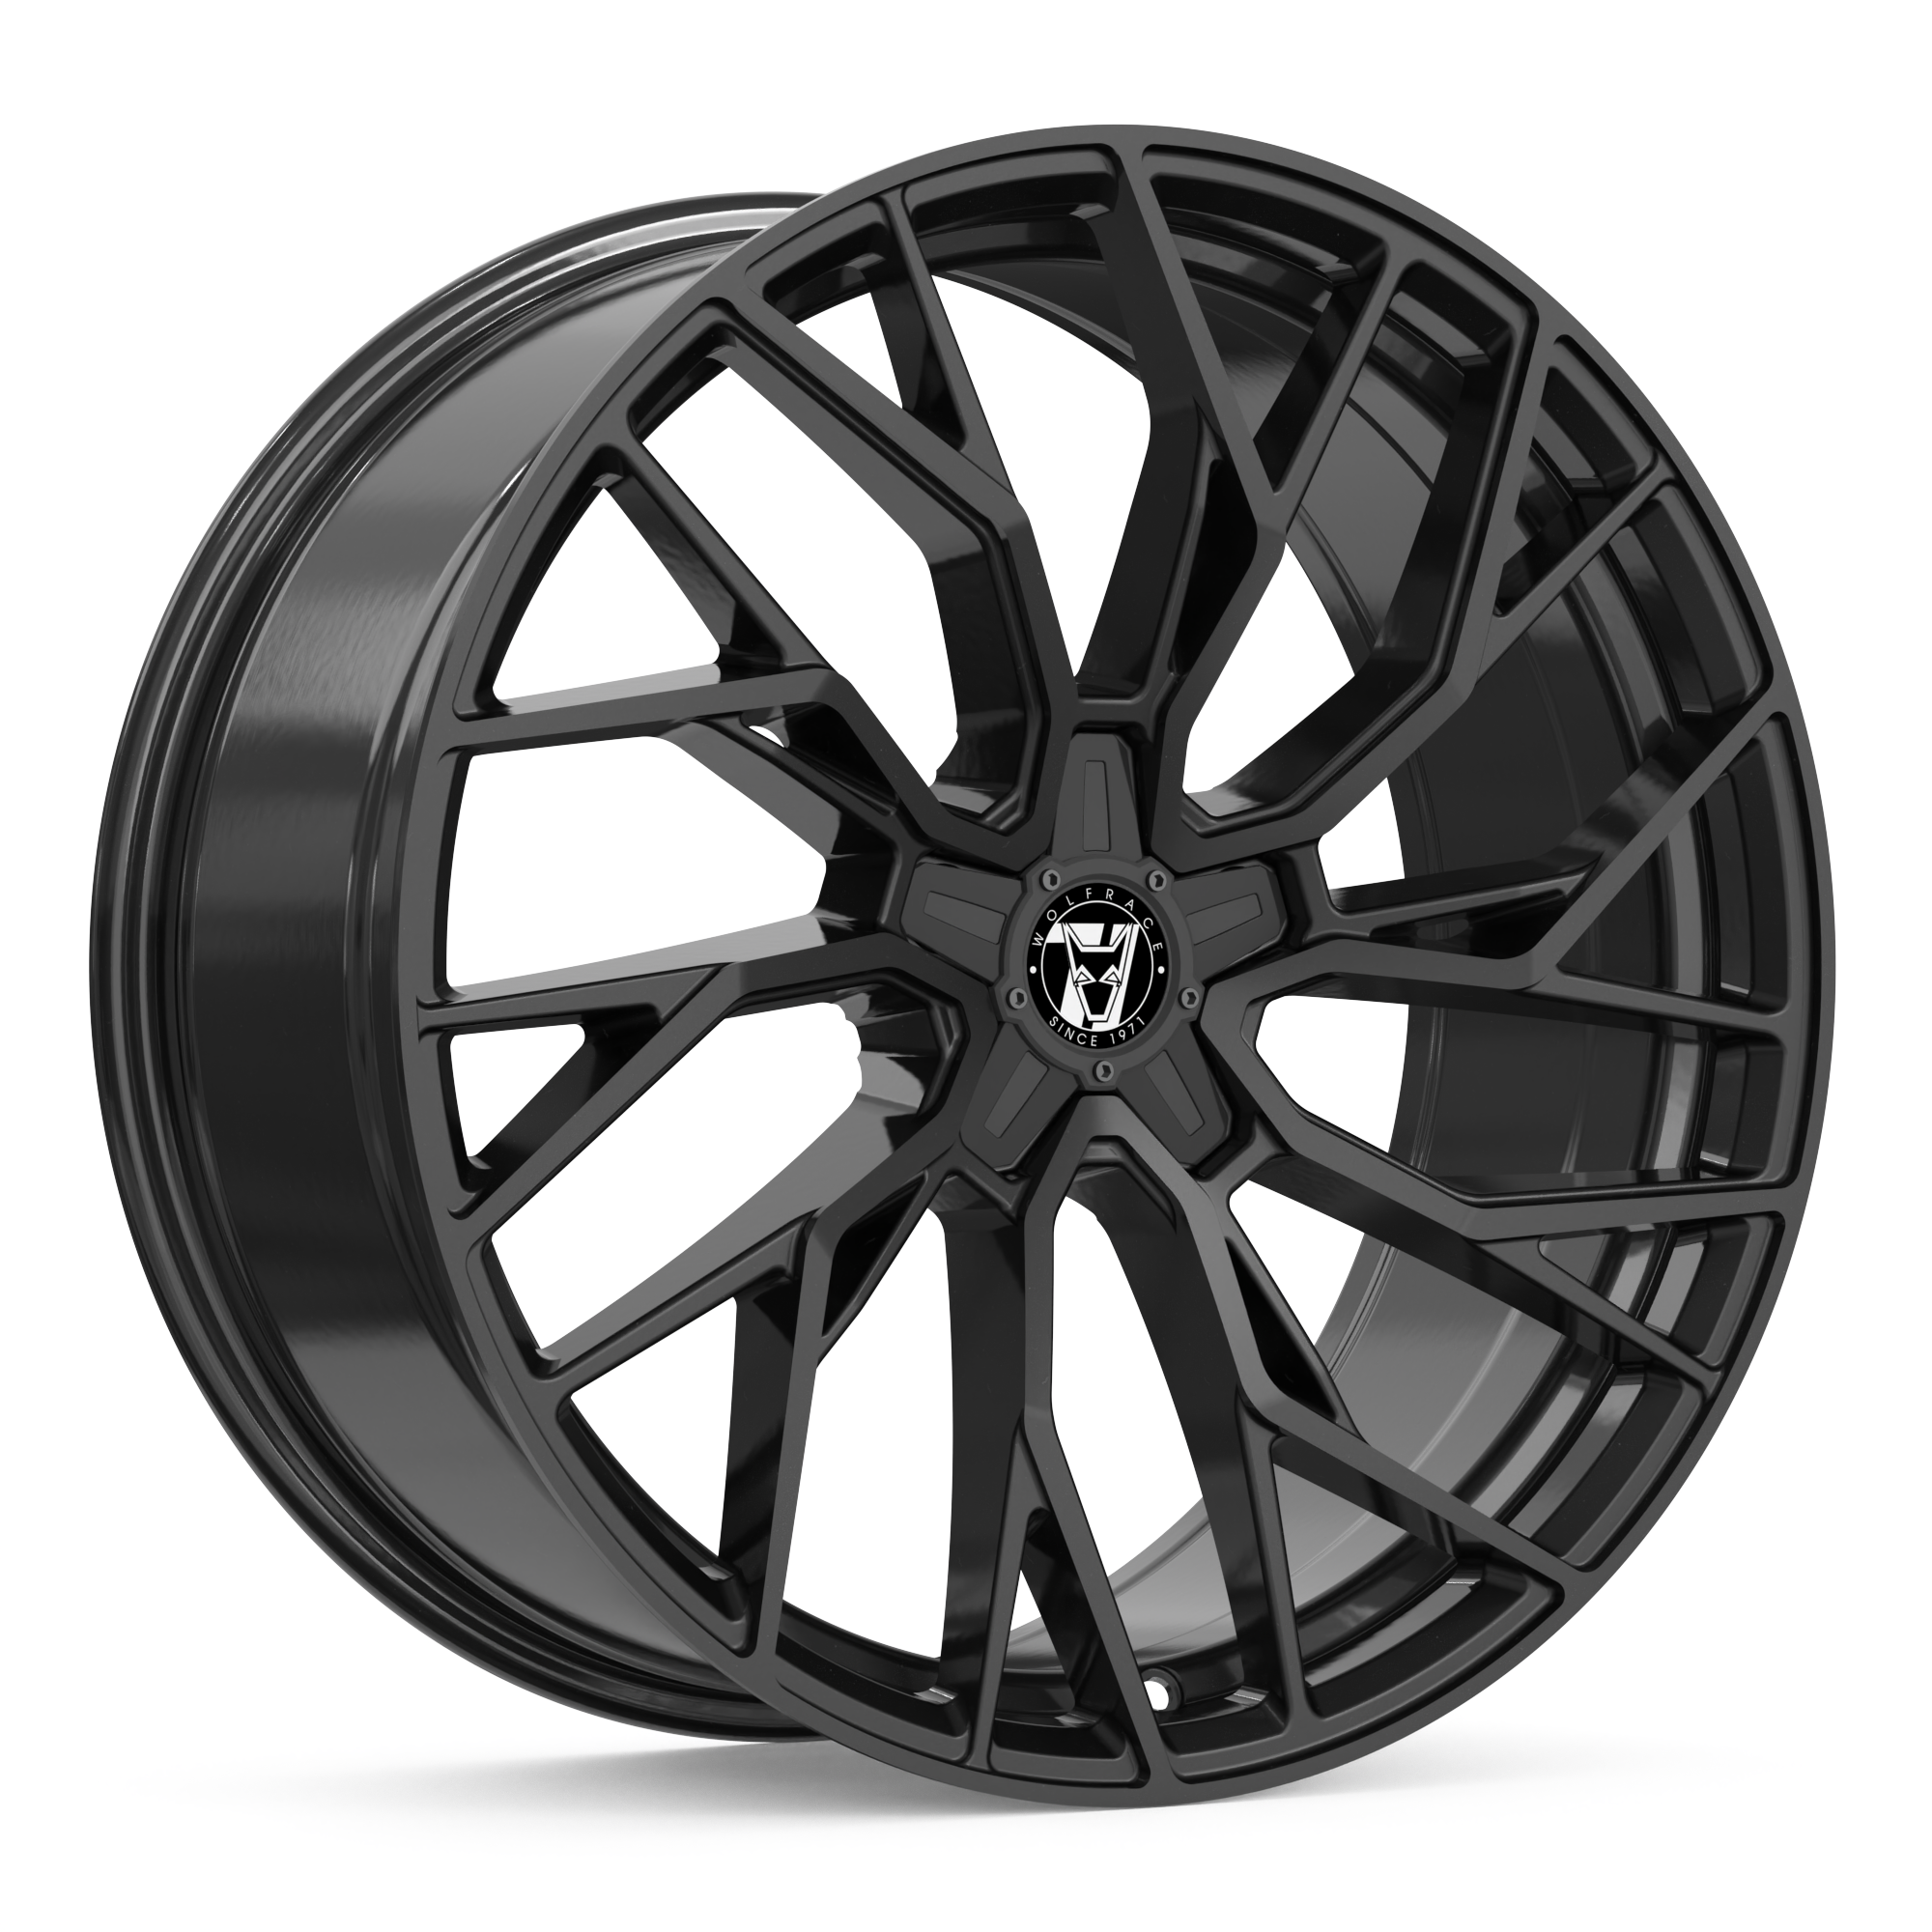 Demon Wheels 71 Voodoo Black Edition [9.5x22] -5x130- ET 45